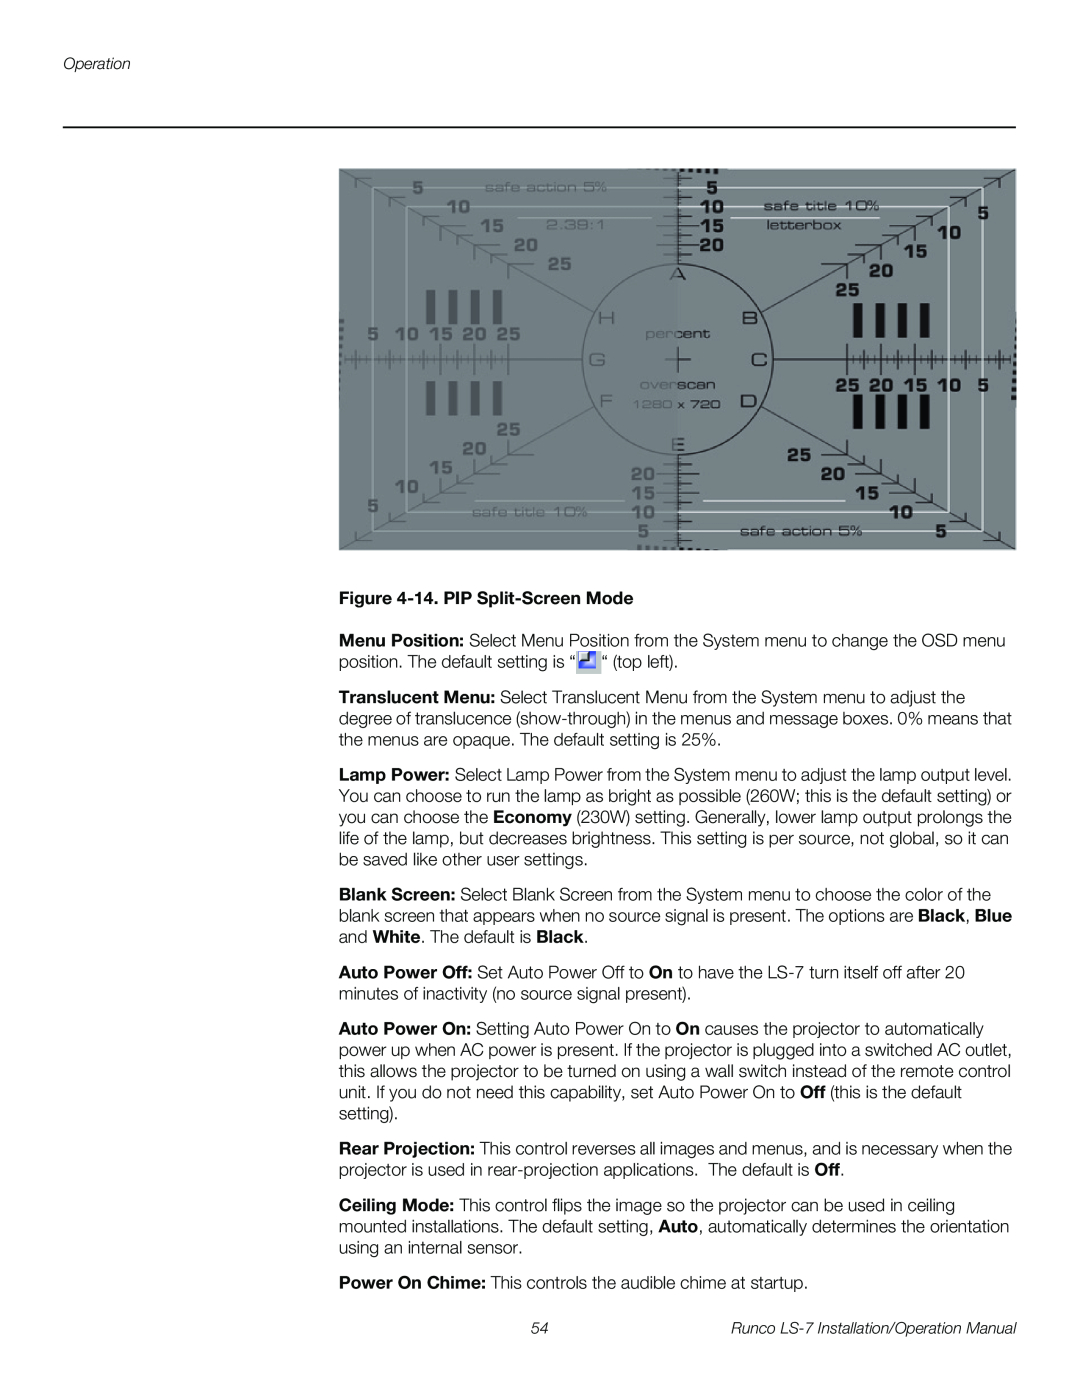 Runco LS-7 operation manual 14.PIP Split-ScreenMode, Operation 